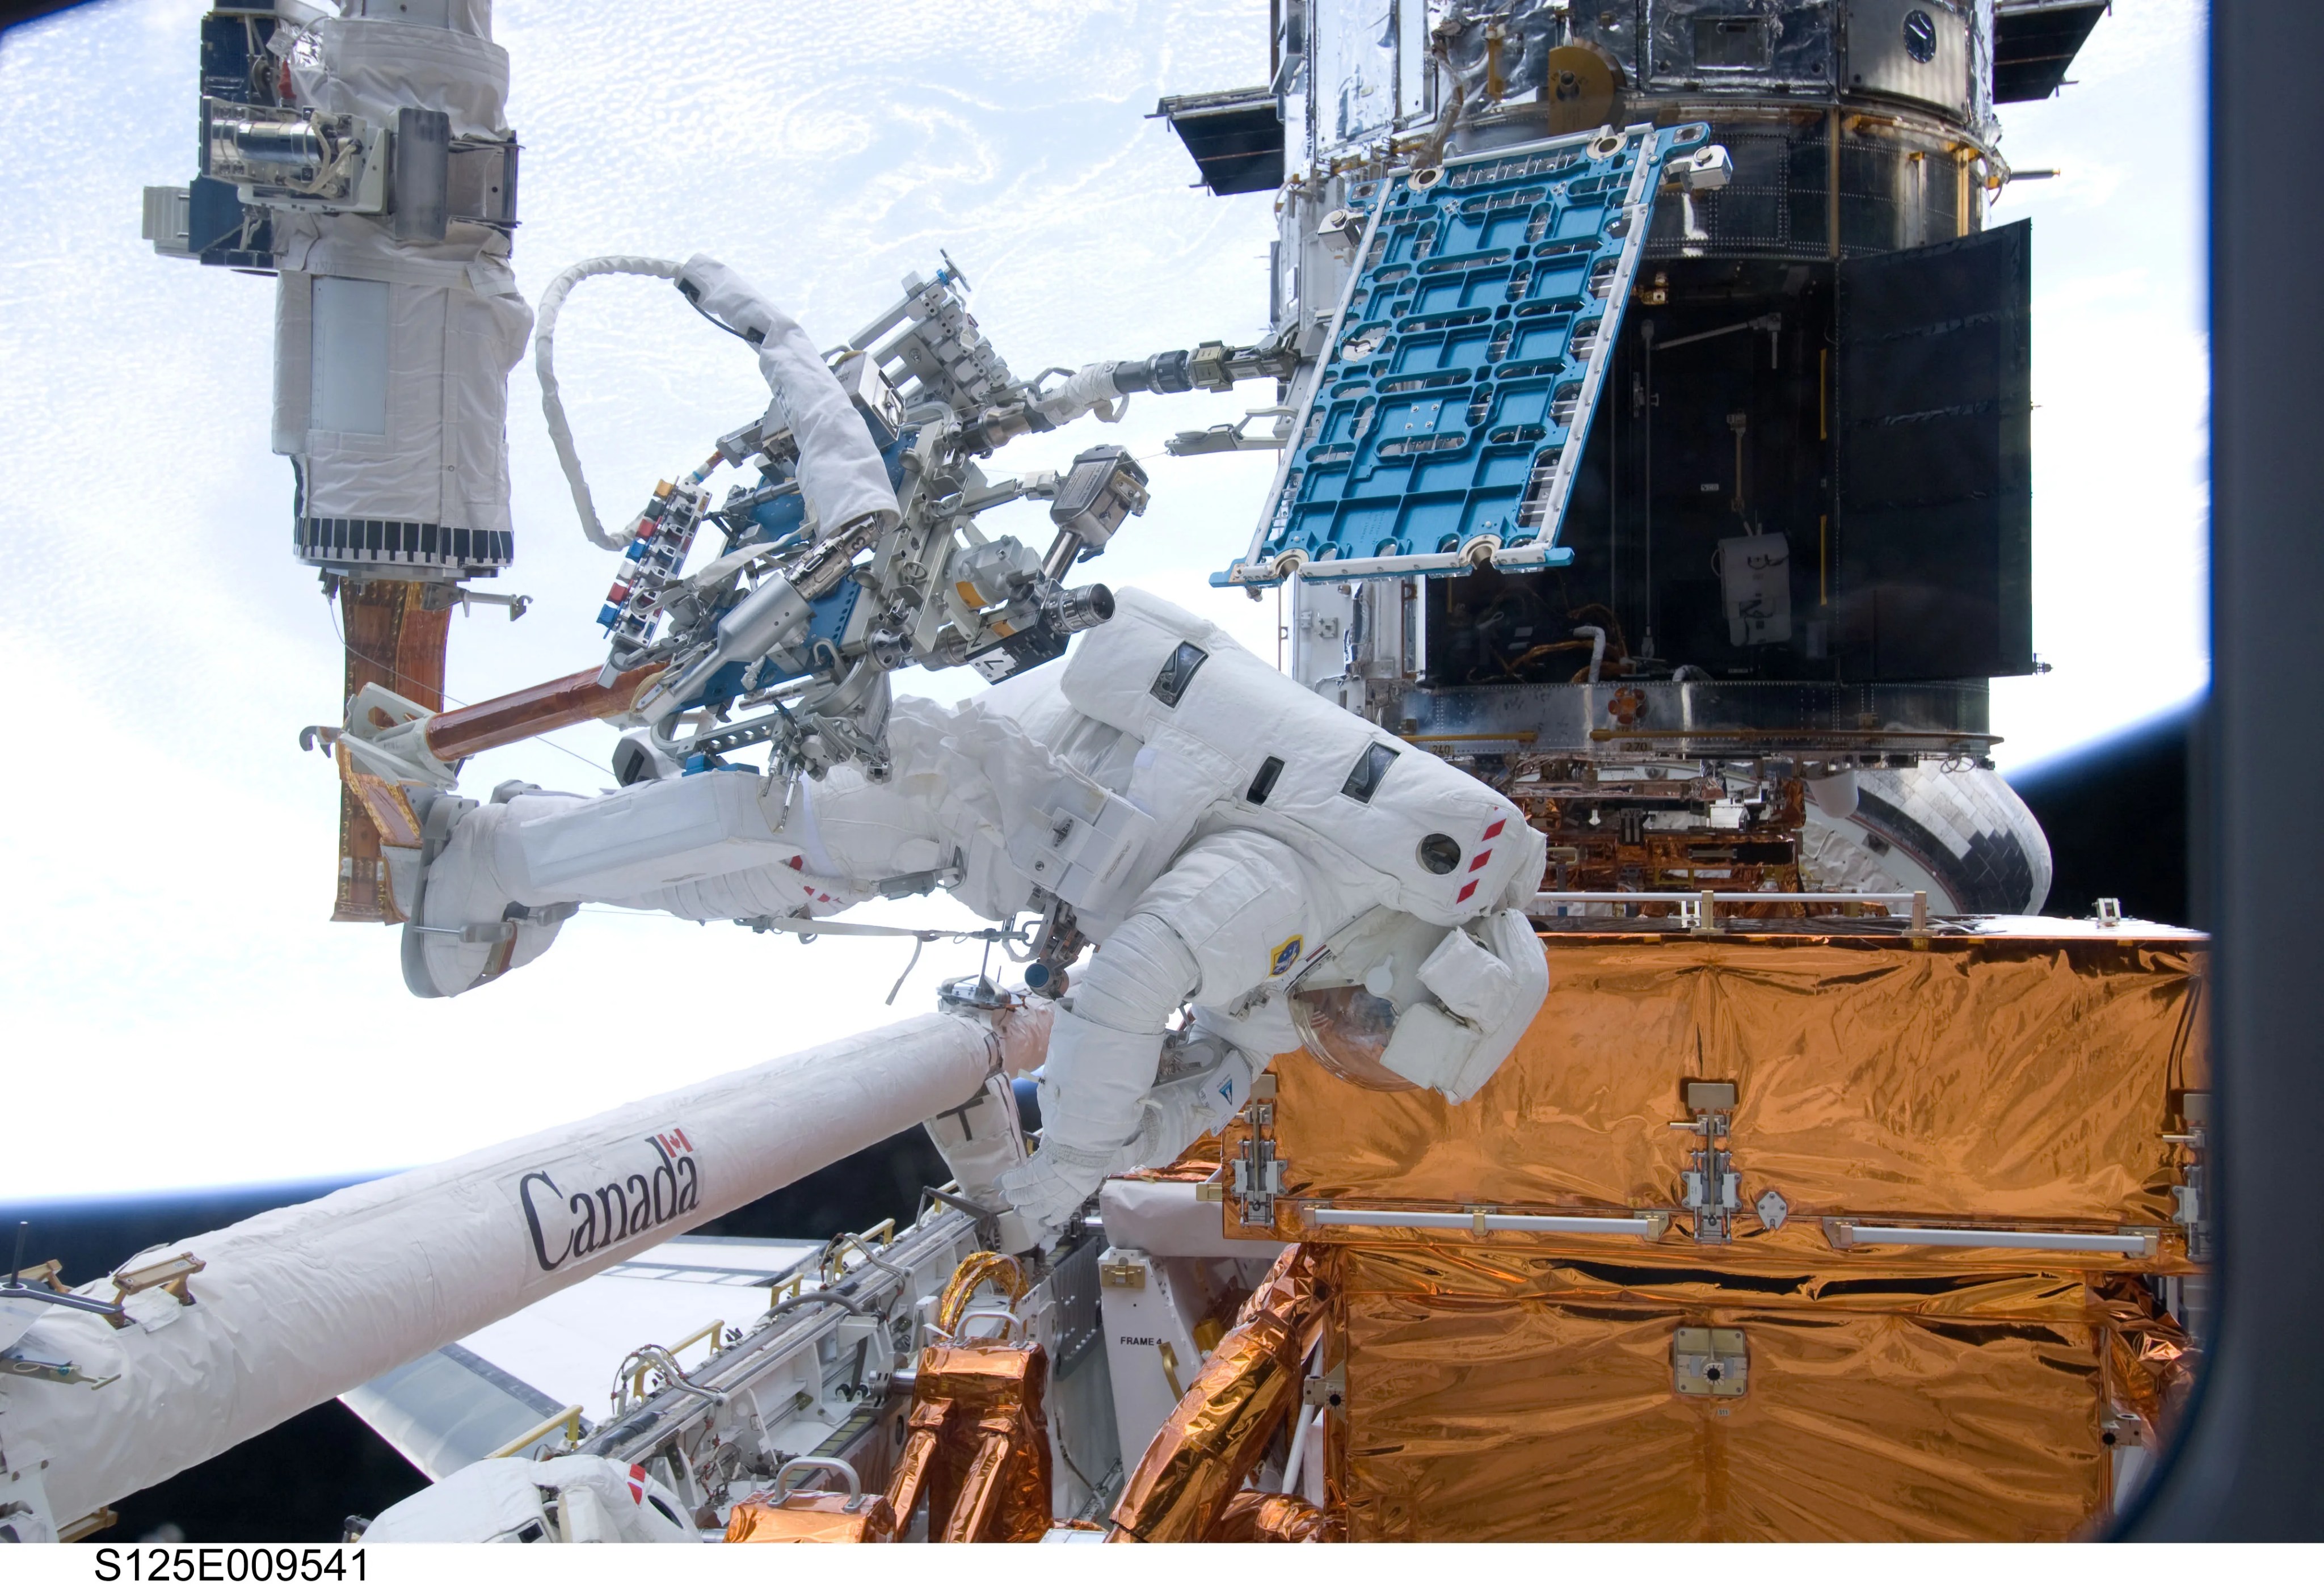 astronauts working on Hubble